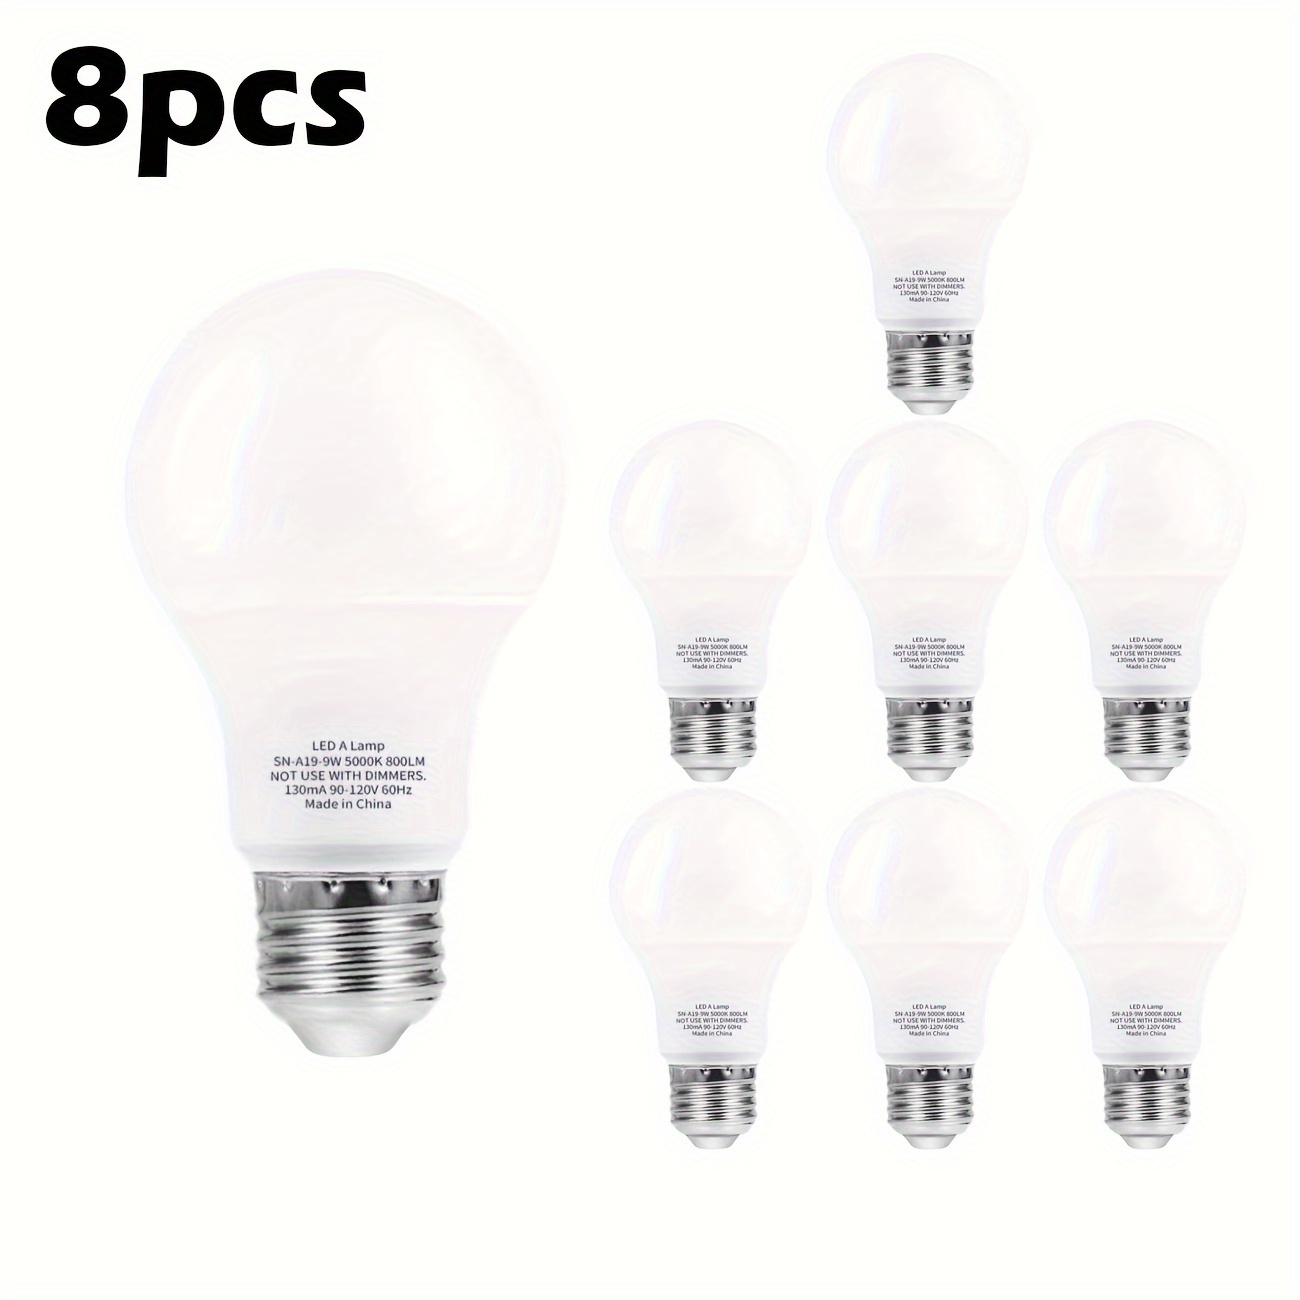 SANSI Bombilla LED regulable equivalente a 150 vatios, A19 2500 lúmenes,  3000 K, luz blanca suave, base E26, vida útil de 22.5 años, bombillas de